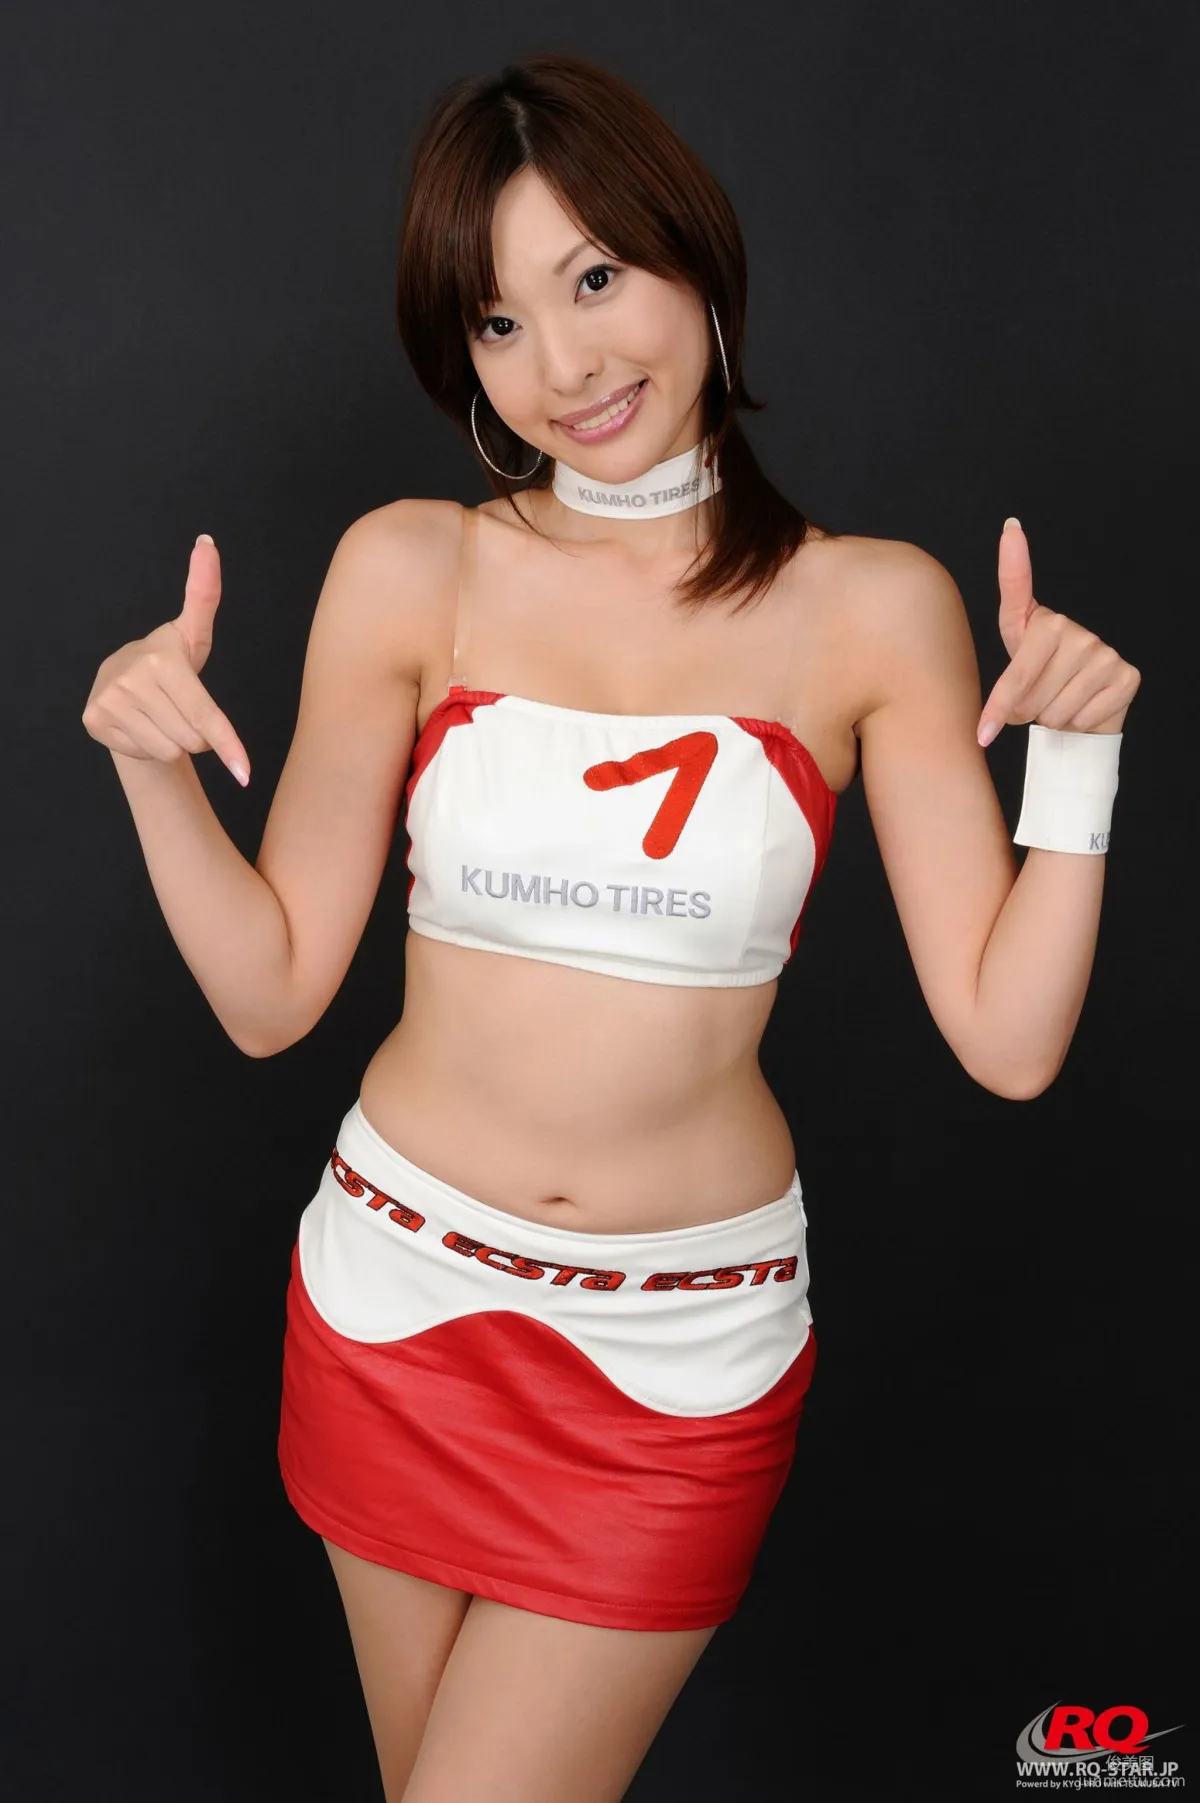 [RQ-STAR] NO.00008 Mayumi Morishita 森下まゆみ Race Queen – 2008 Kumho 写真集103